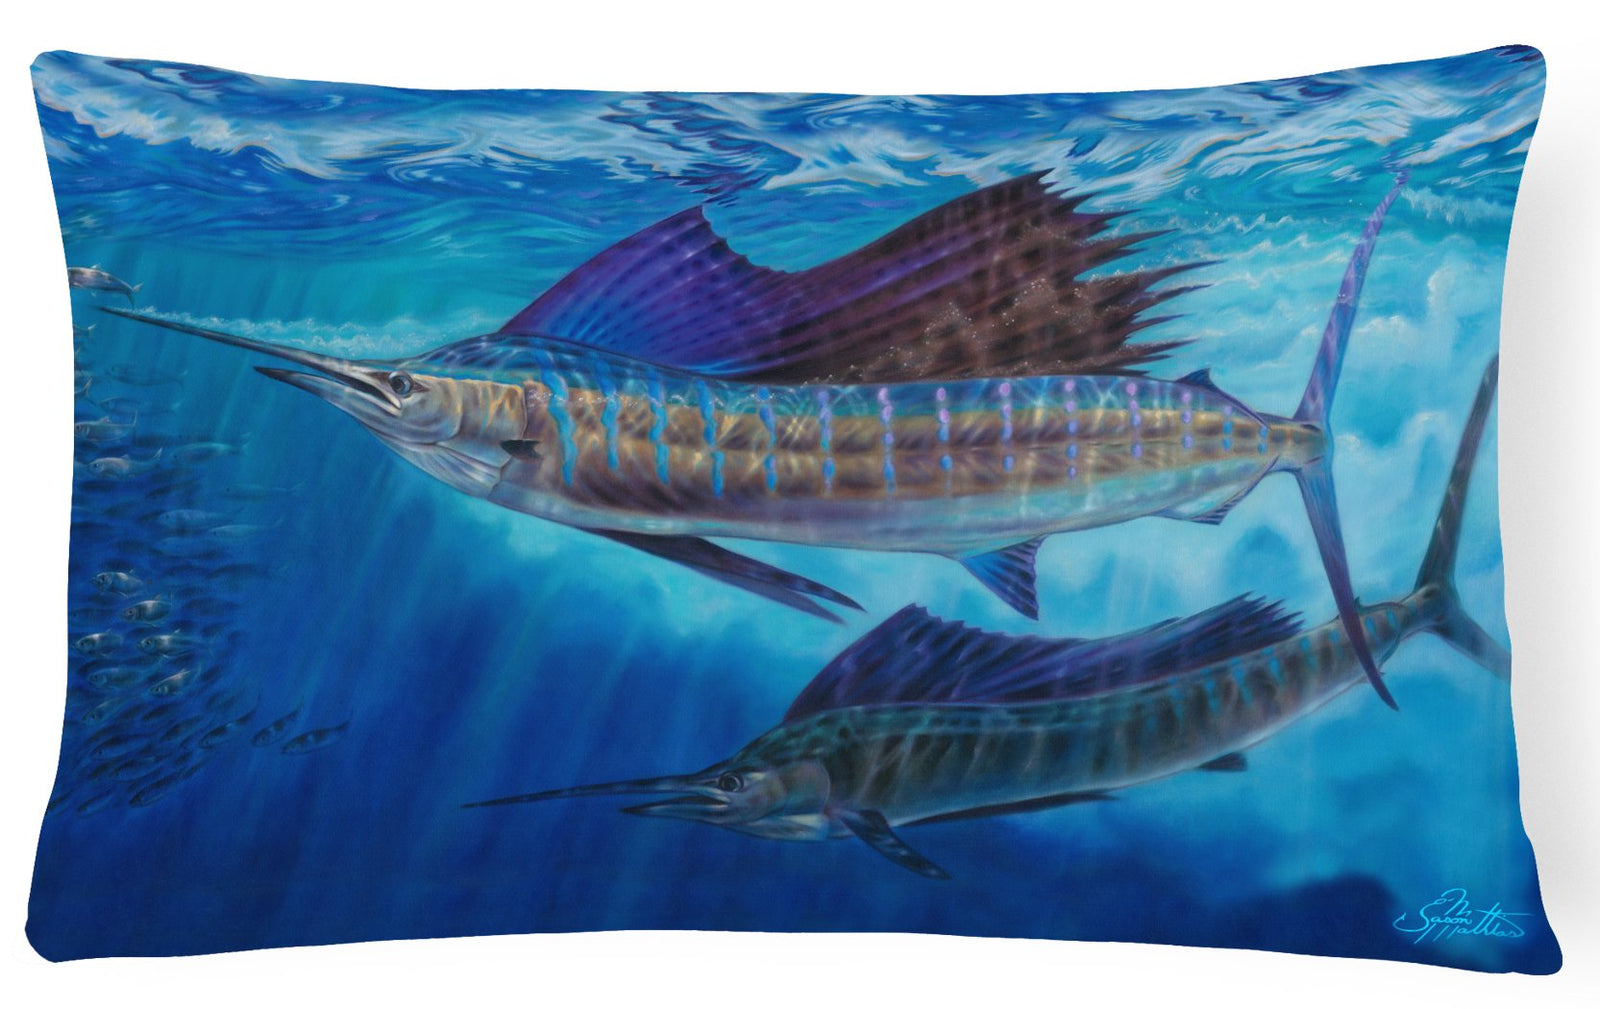 Wide Open Sailfish Canvas Fabric Decorative Pillow JMA2011PW1216 by Caroline's Treasures